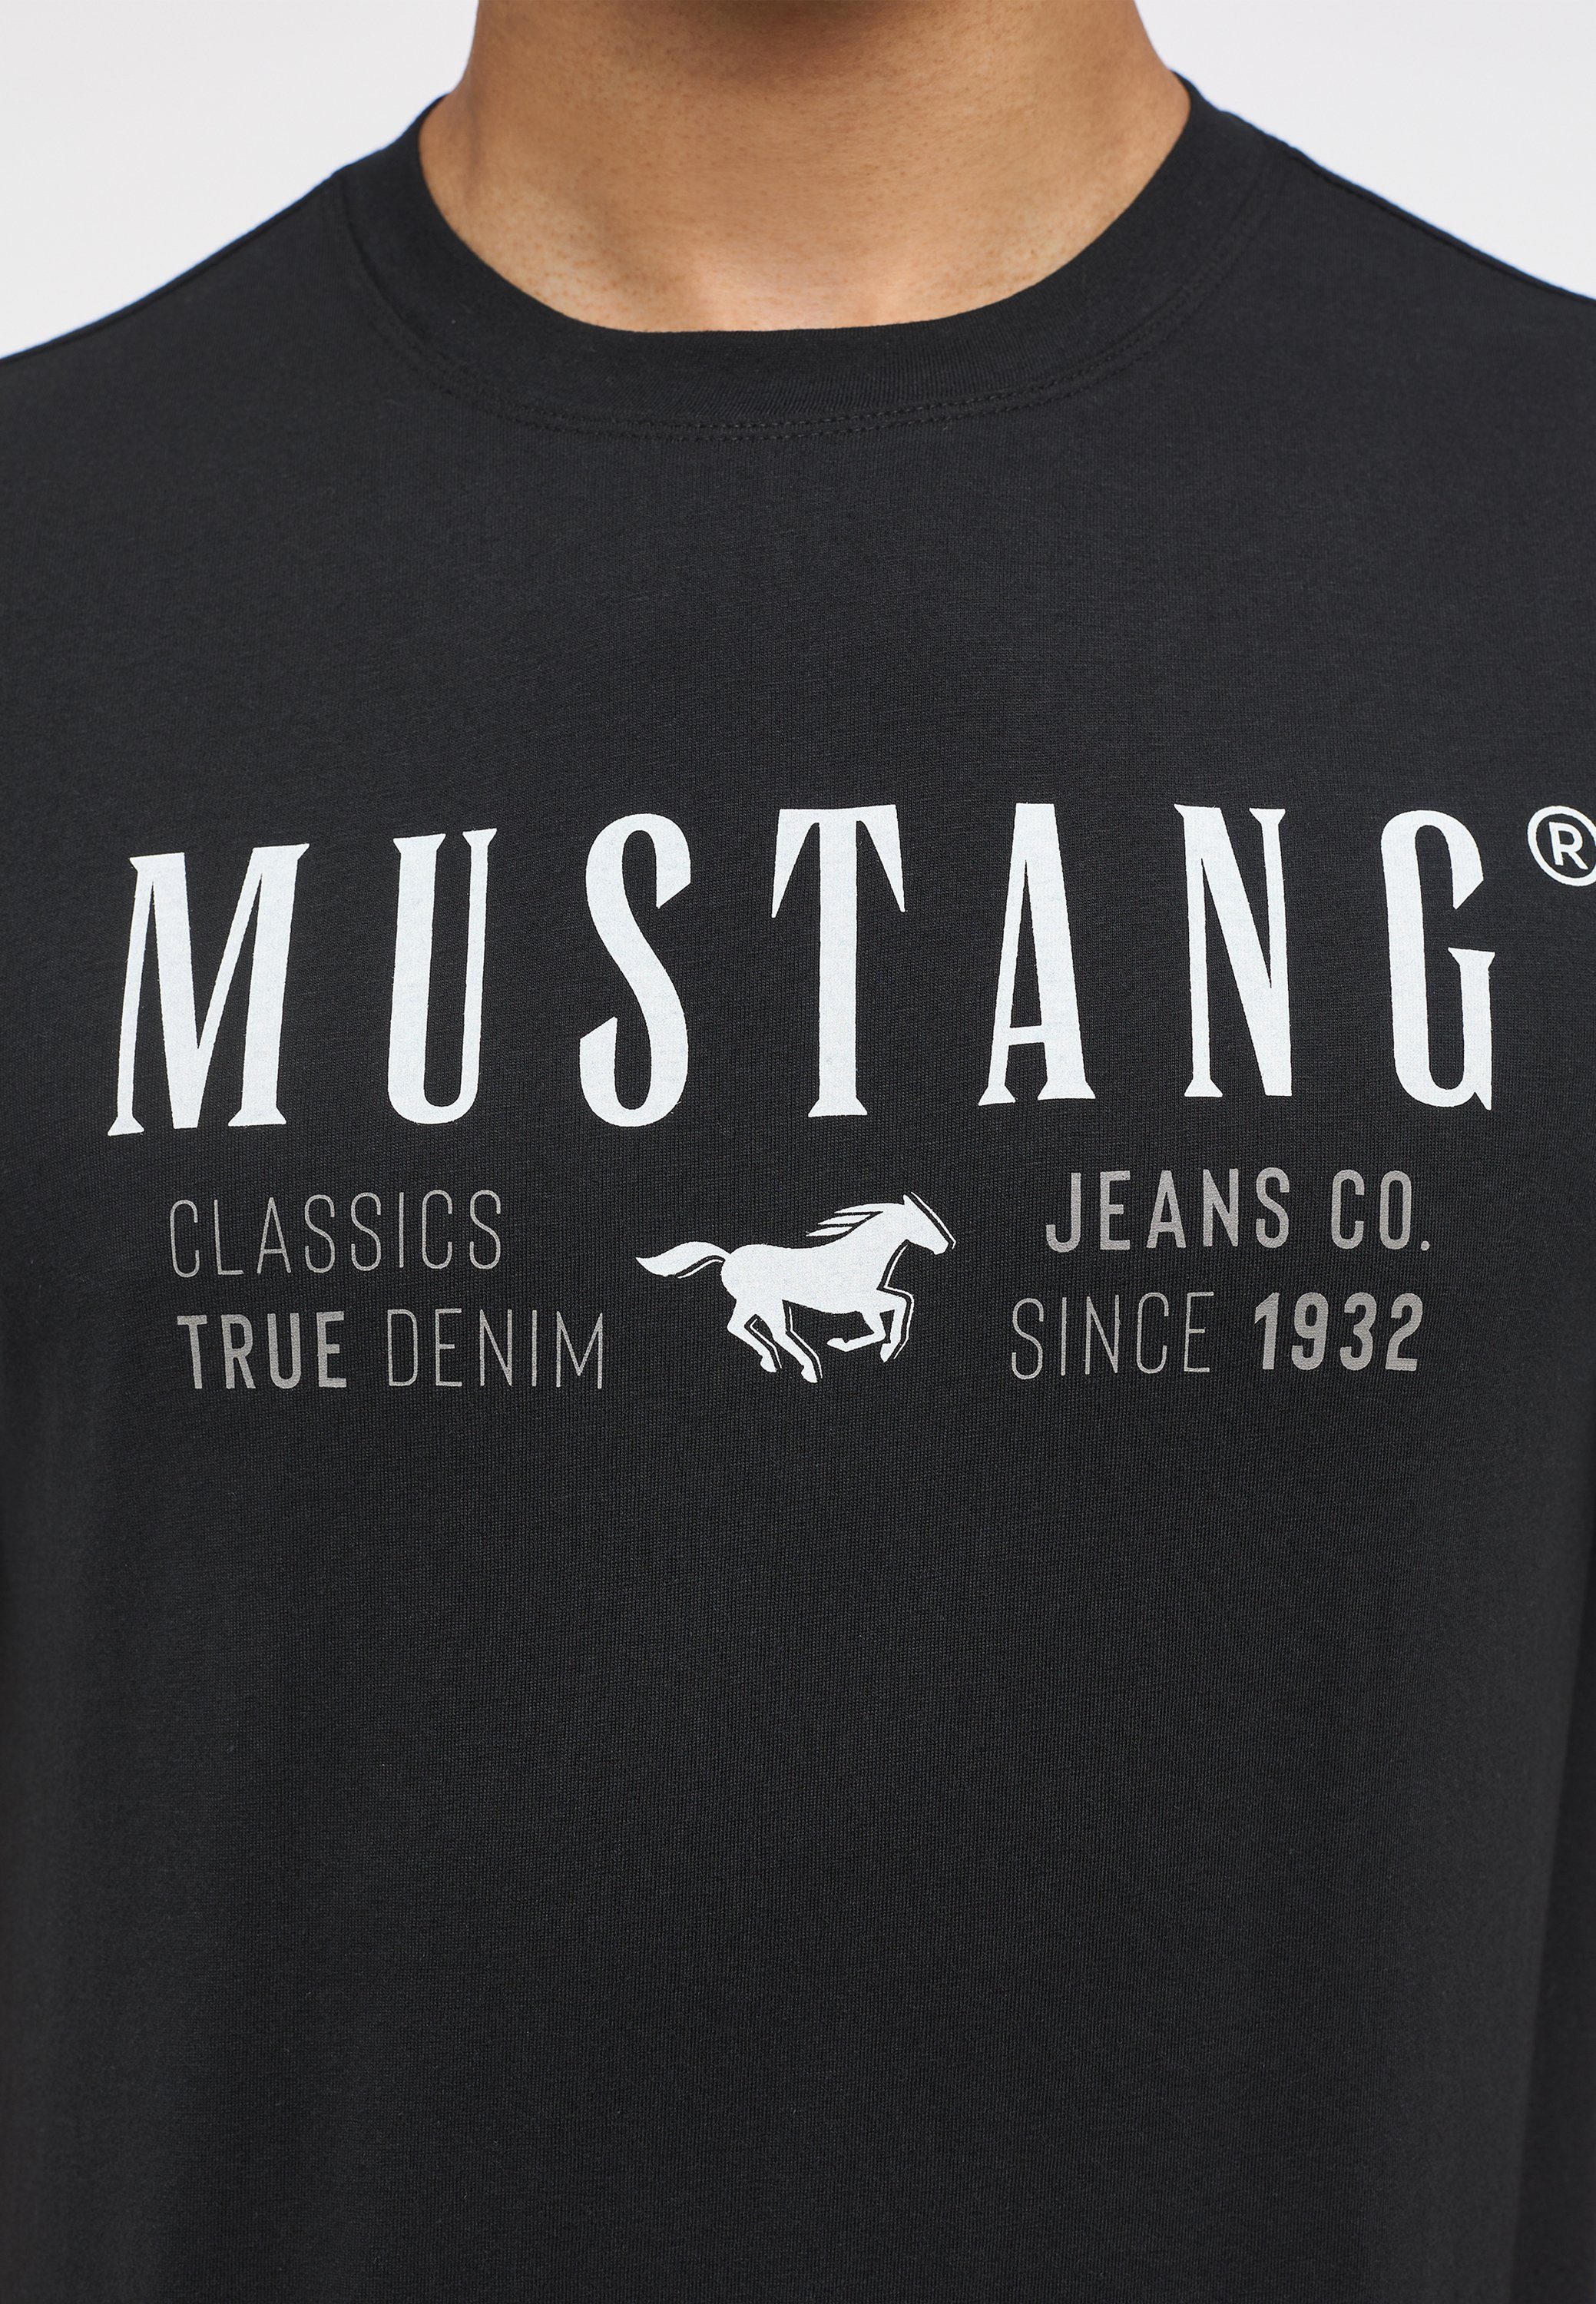 Kurzarmshirt schwarz Print-Shirt Mustang MUSTANG